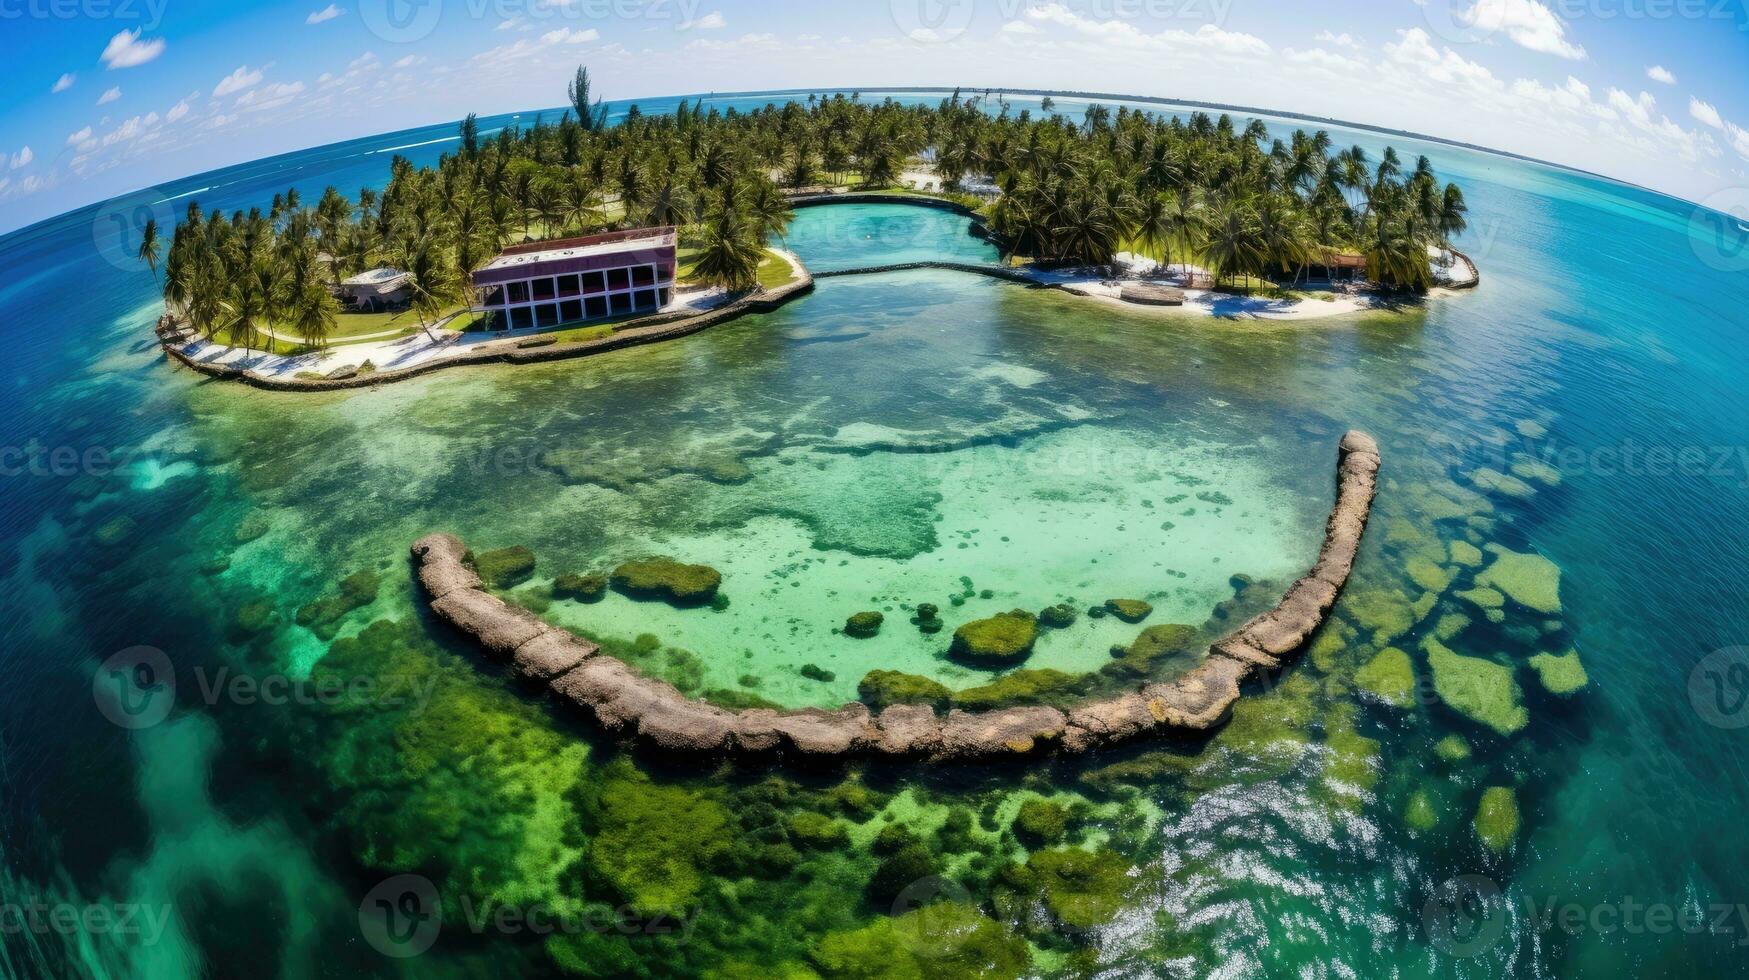 keerkring Maldiven eiland antenne vredig landschap vrijheid tafereel mooi natuur behang foto